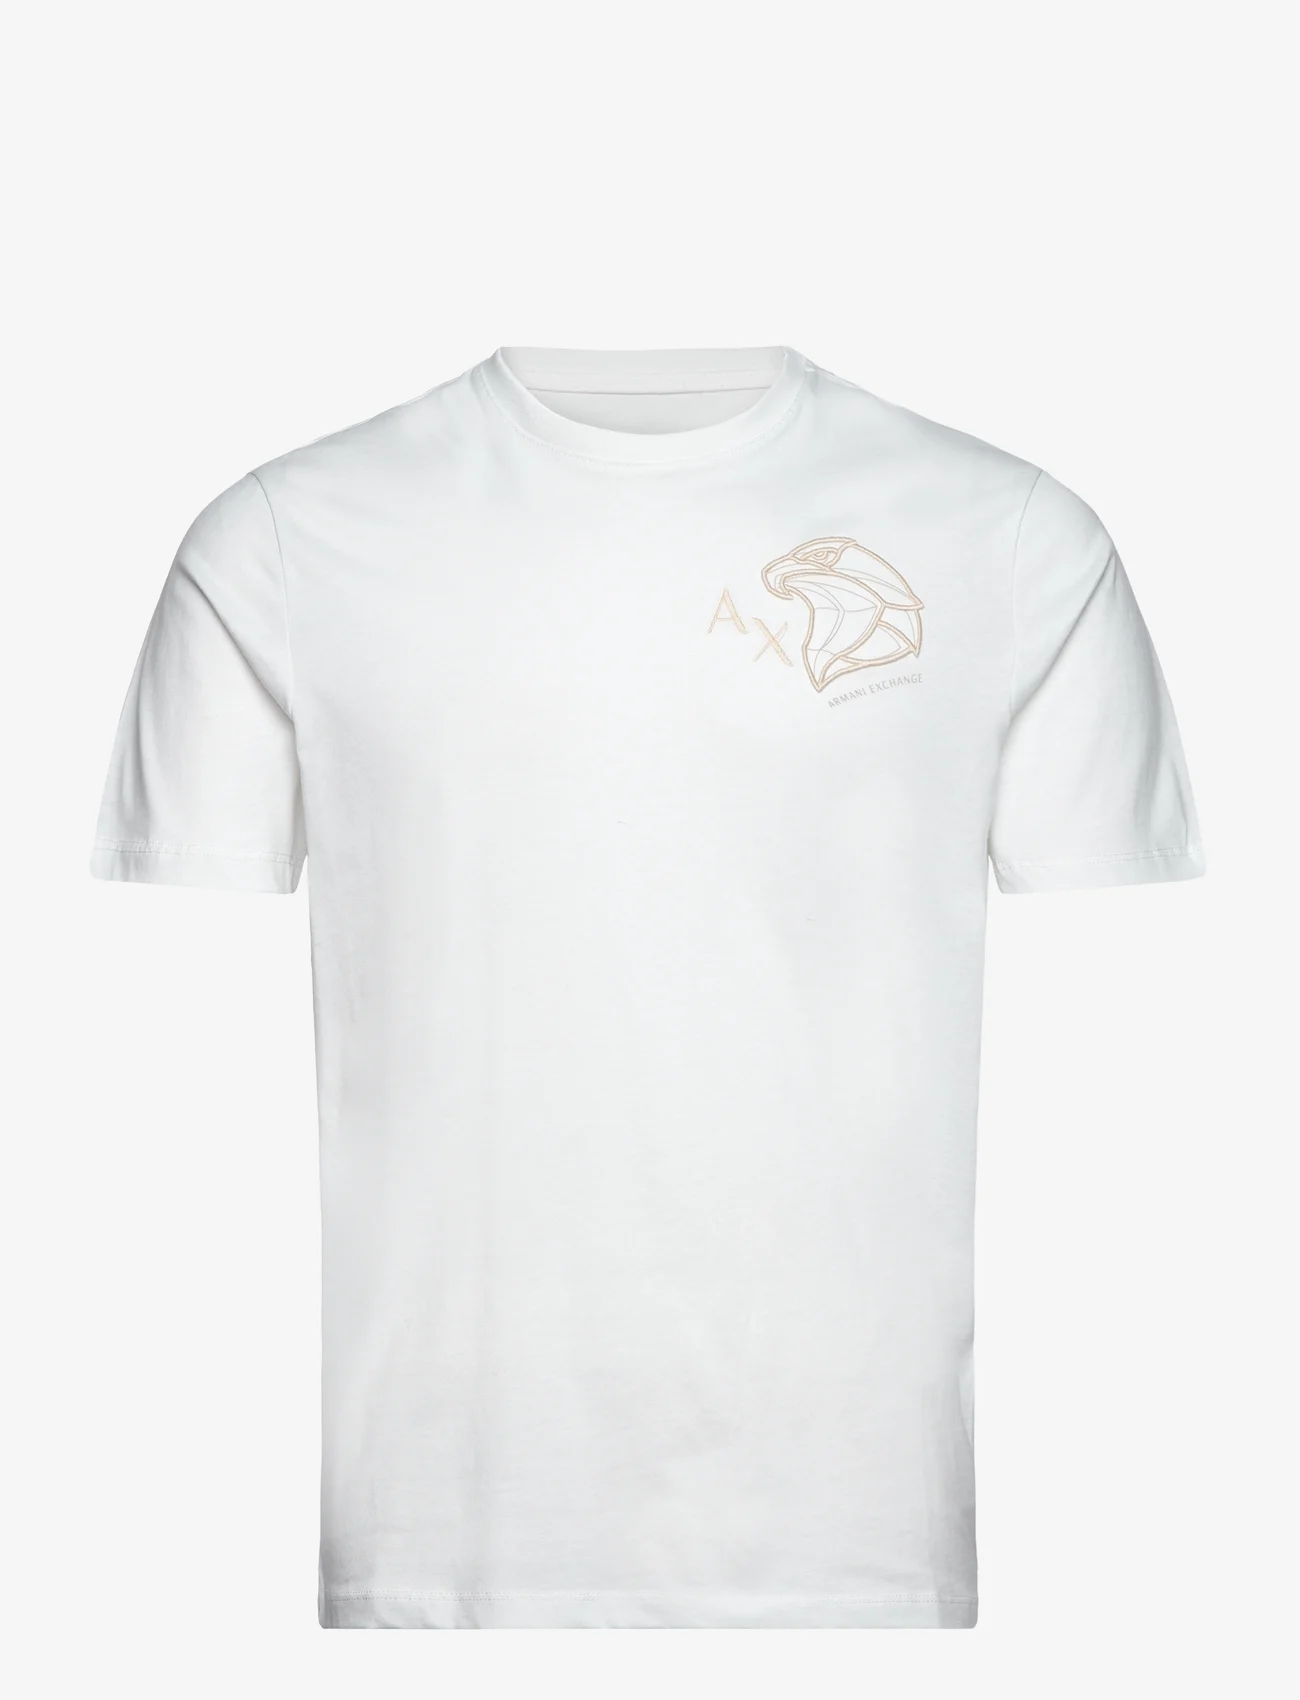 Armani Exchange - T-SHIRT - kortärmade t-shirts - 1116-off white - 0